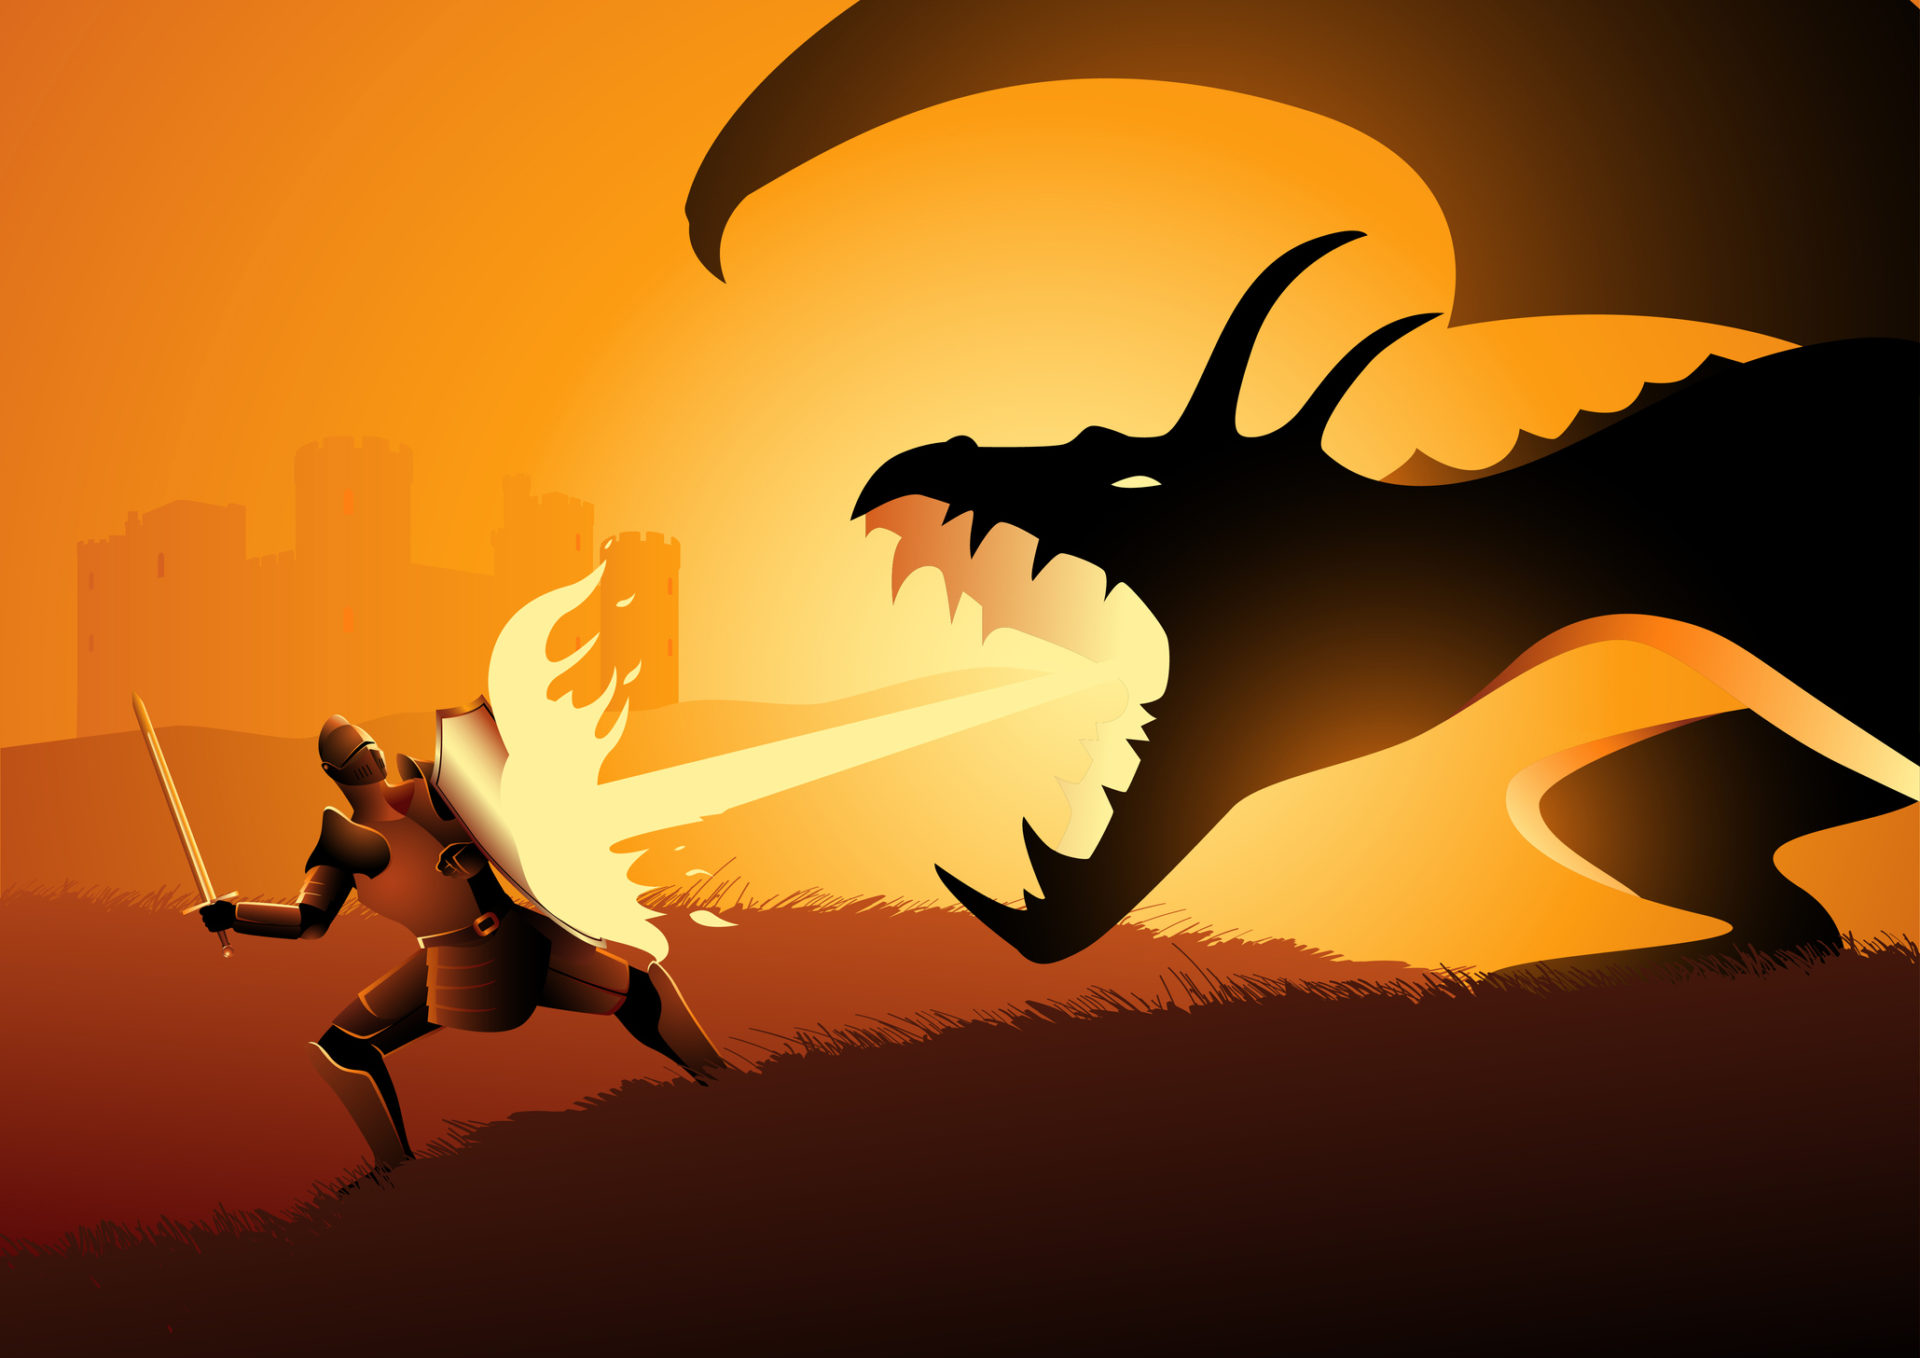 Knight fighting a dragon